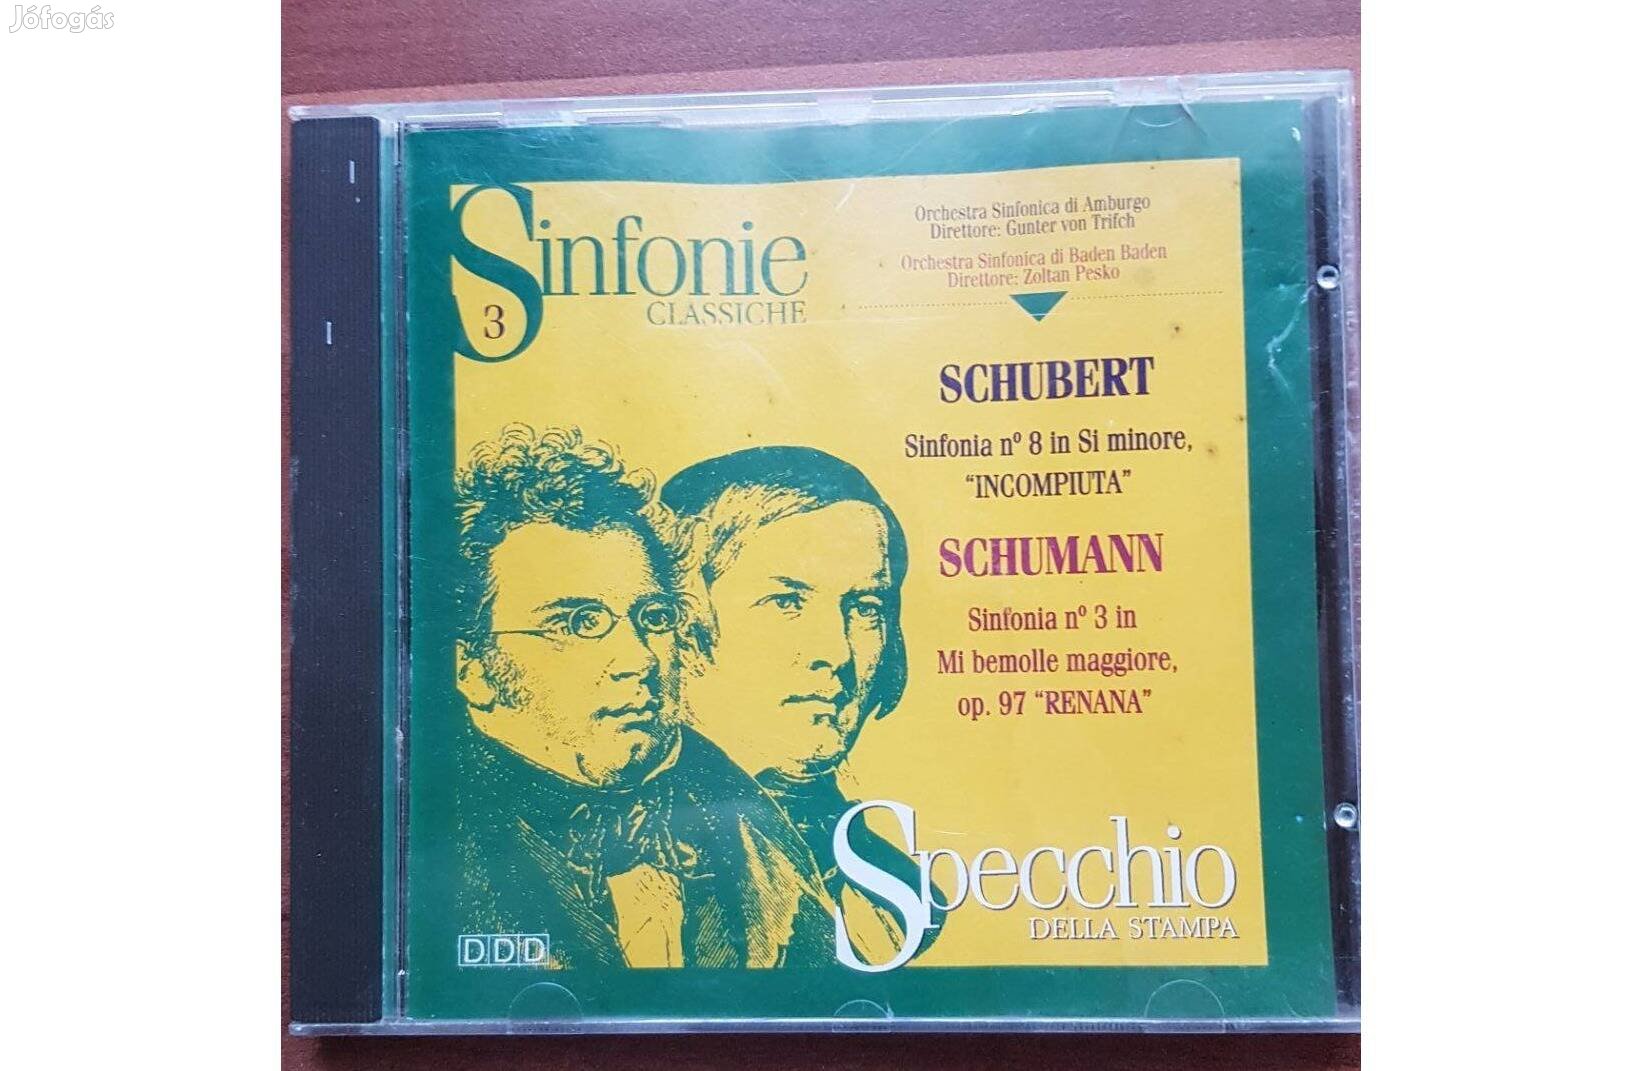 Sinfonie Classiche 3 - Schubert & Schumann